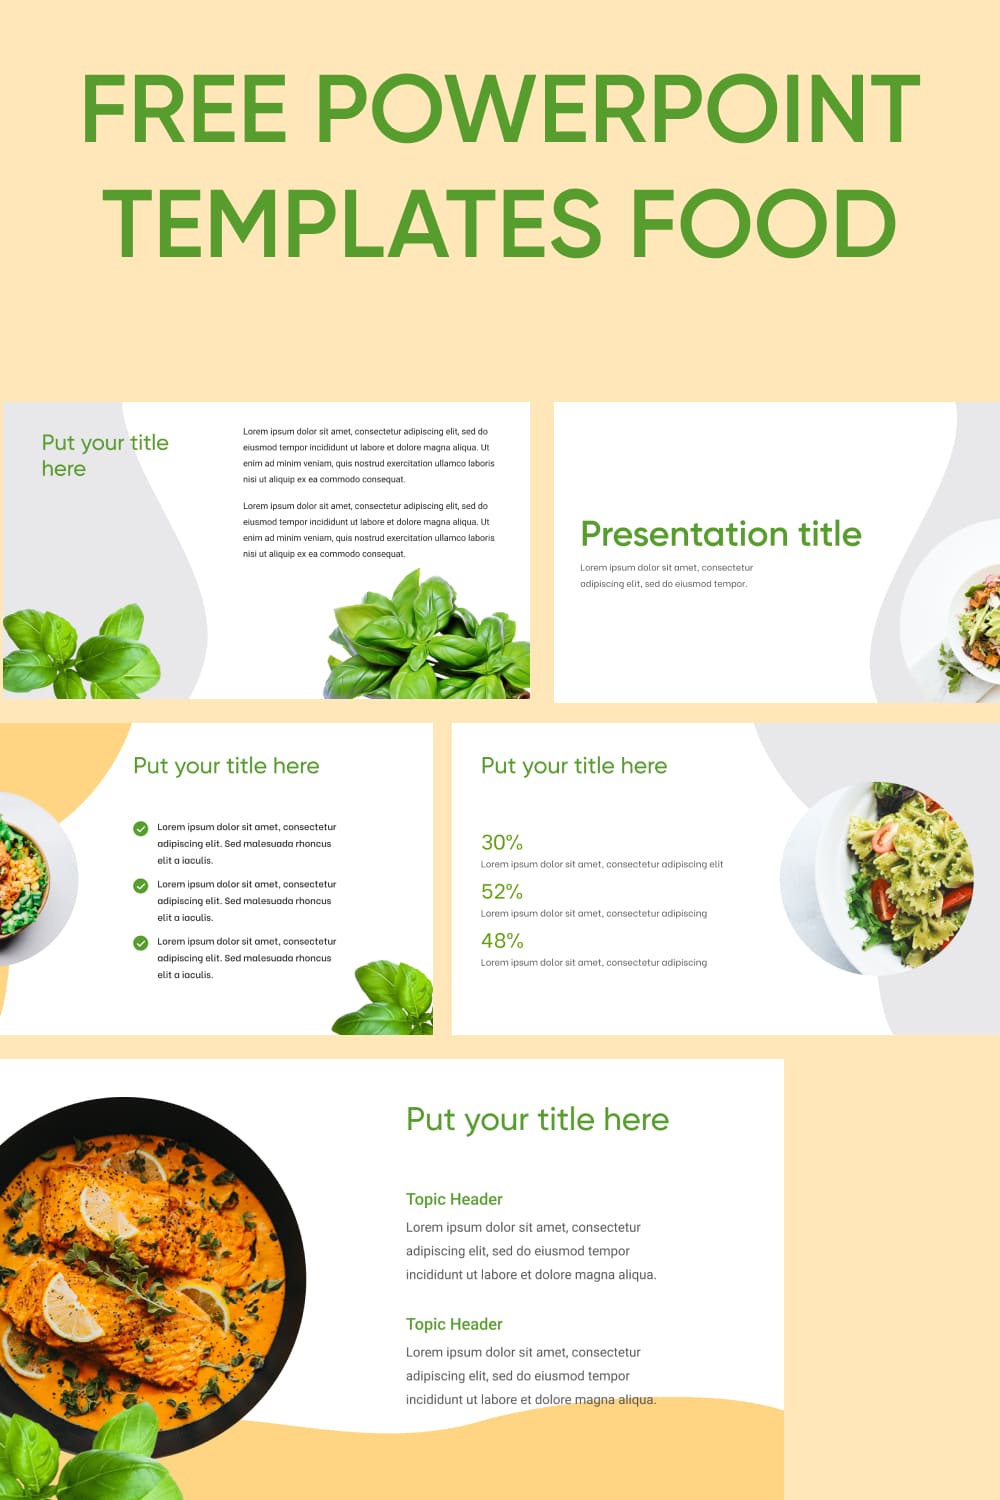 Pinterest Free Powerpoint Templates Food.